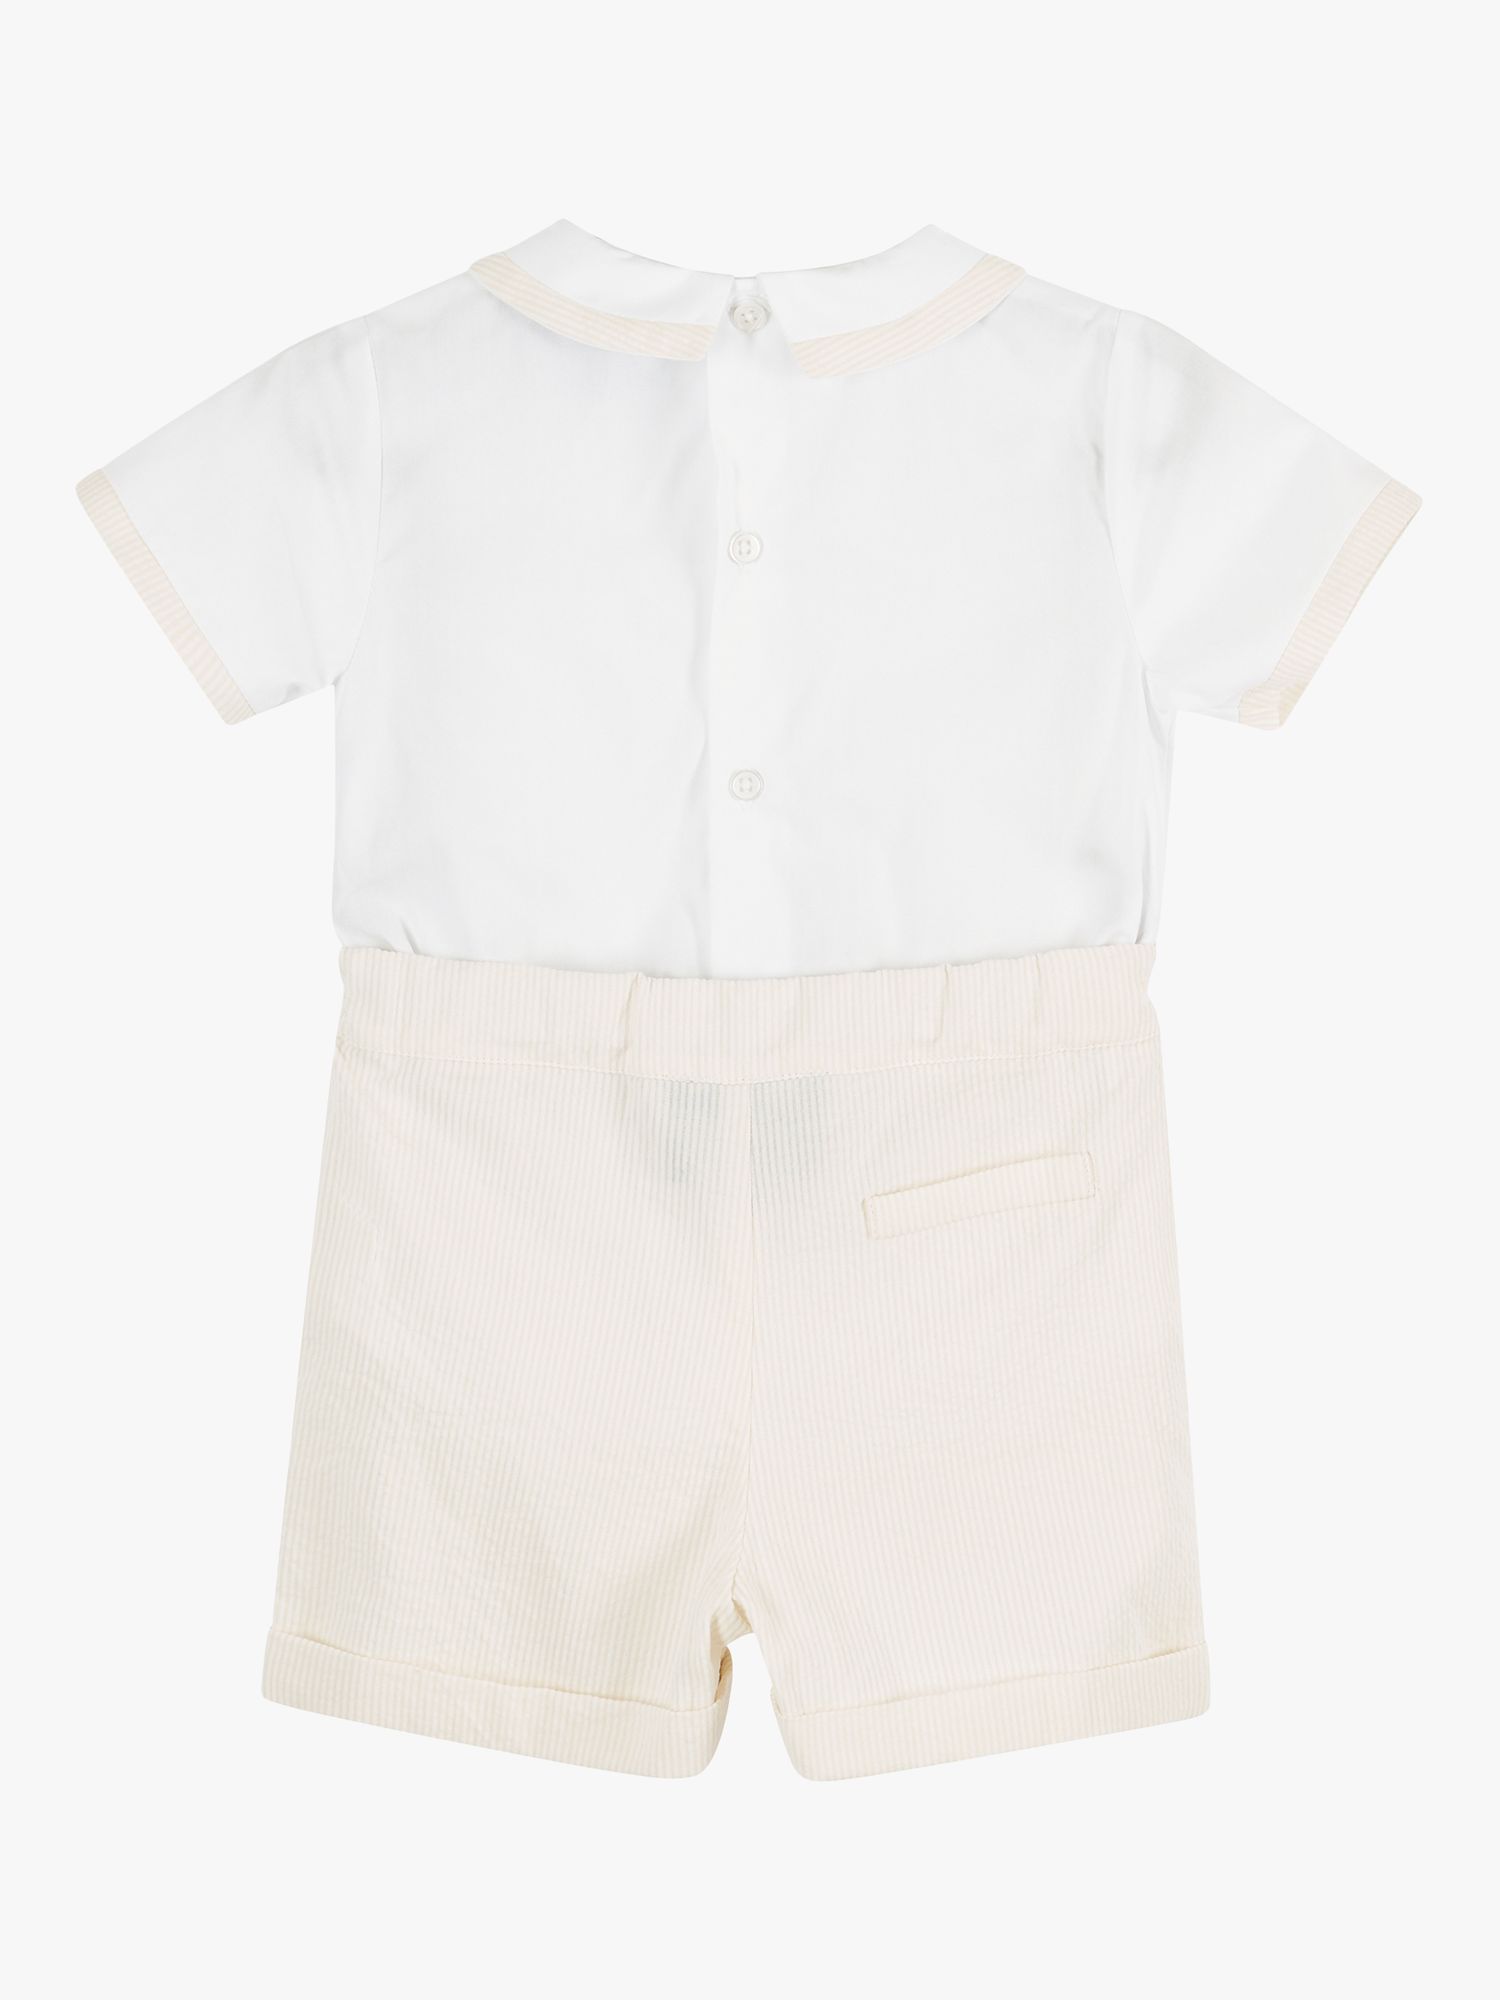 Buy Trotters Kids' Rupert Short Sleeve Shirt & Shorts Set, Oatmeal/White Online at johnlewis.com